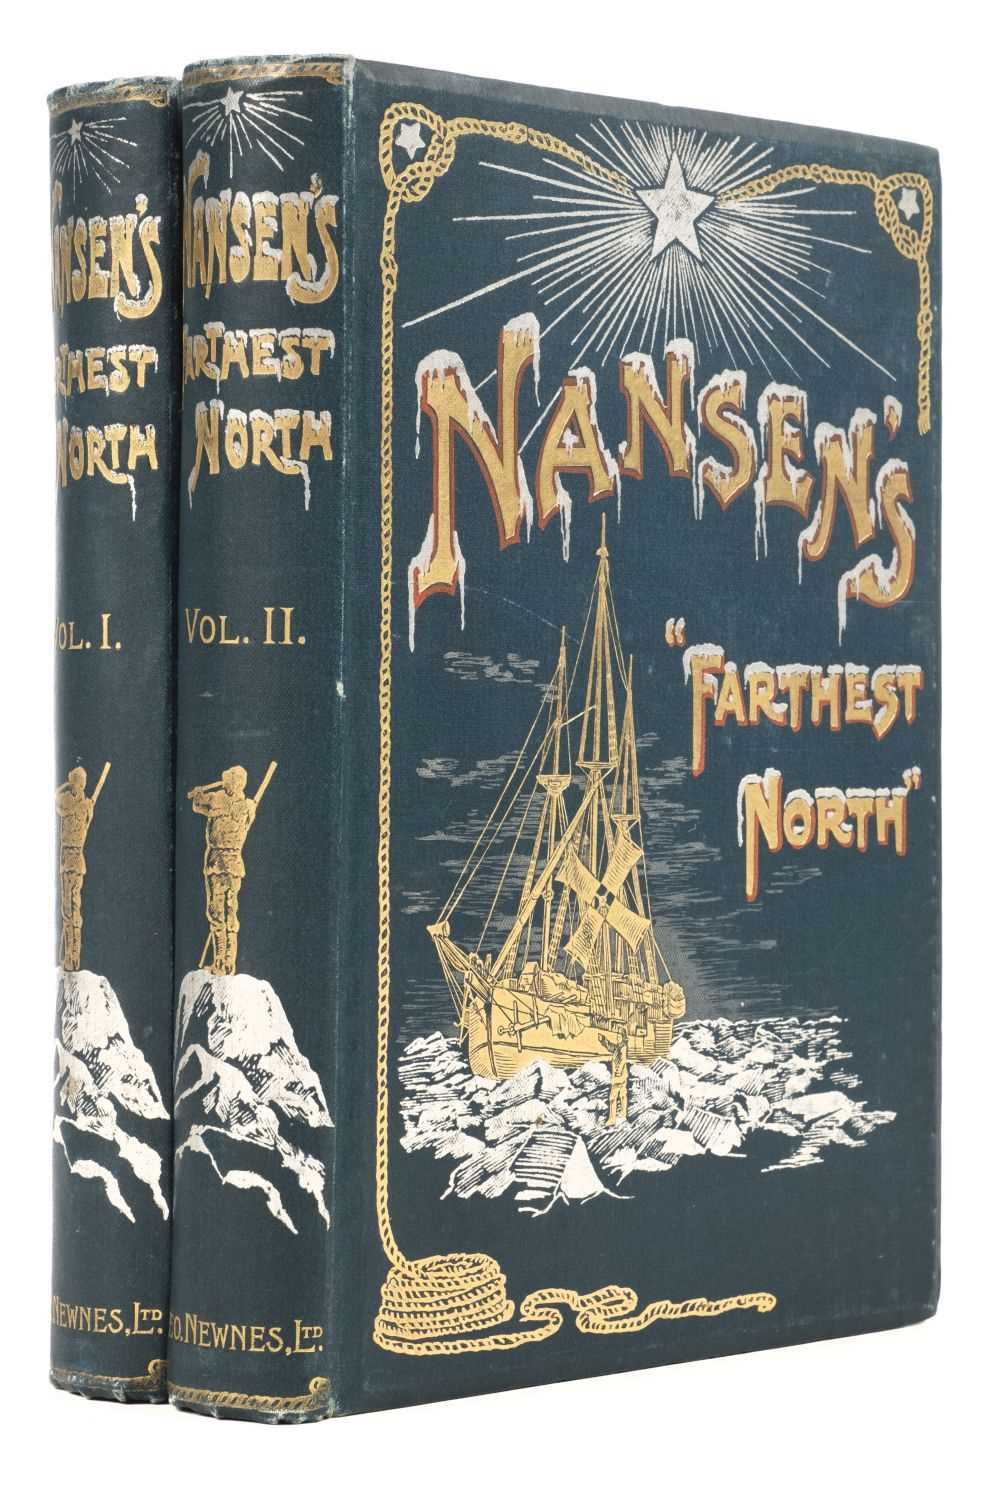 Lot 12 - Nansen (Fridtjof). "Farthest North", 1898